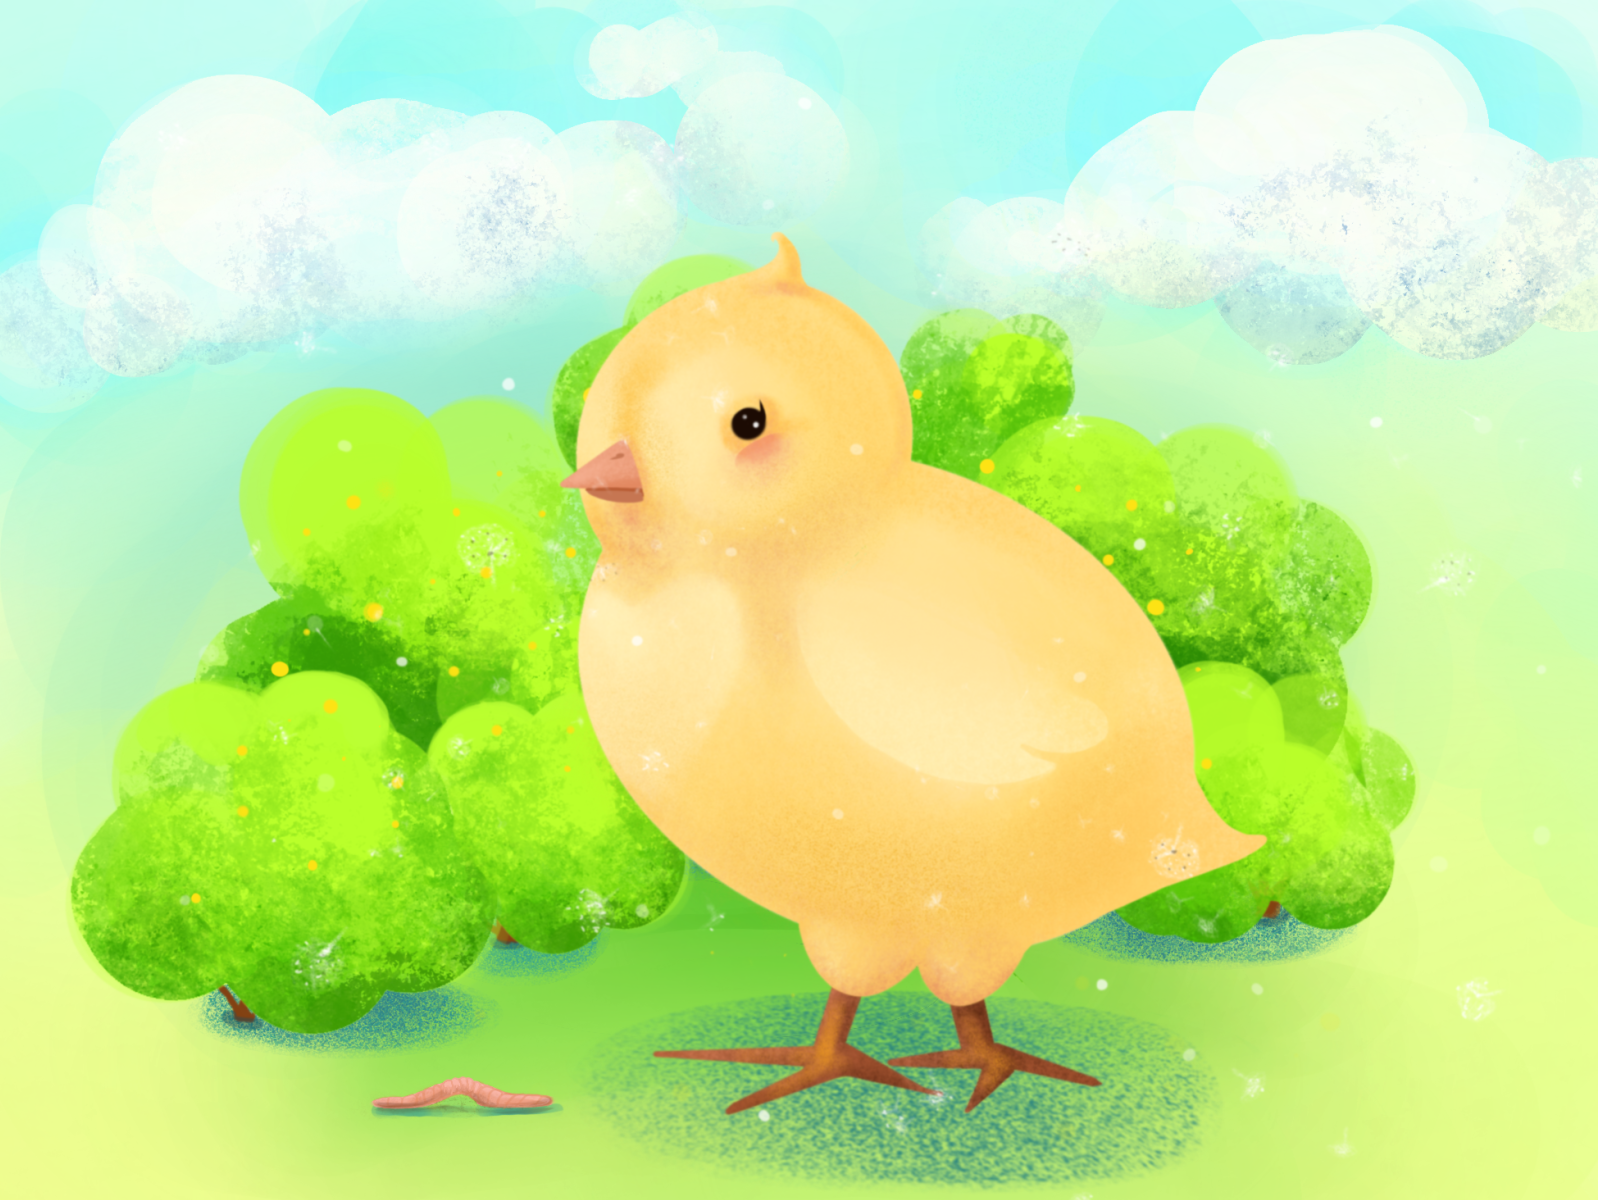 Chick chicks illustrations yellow